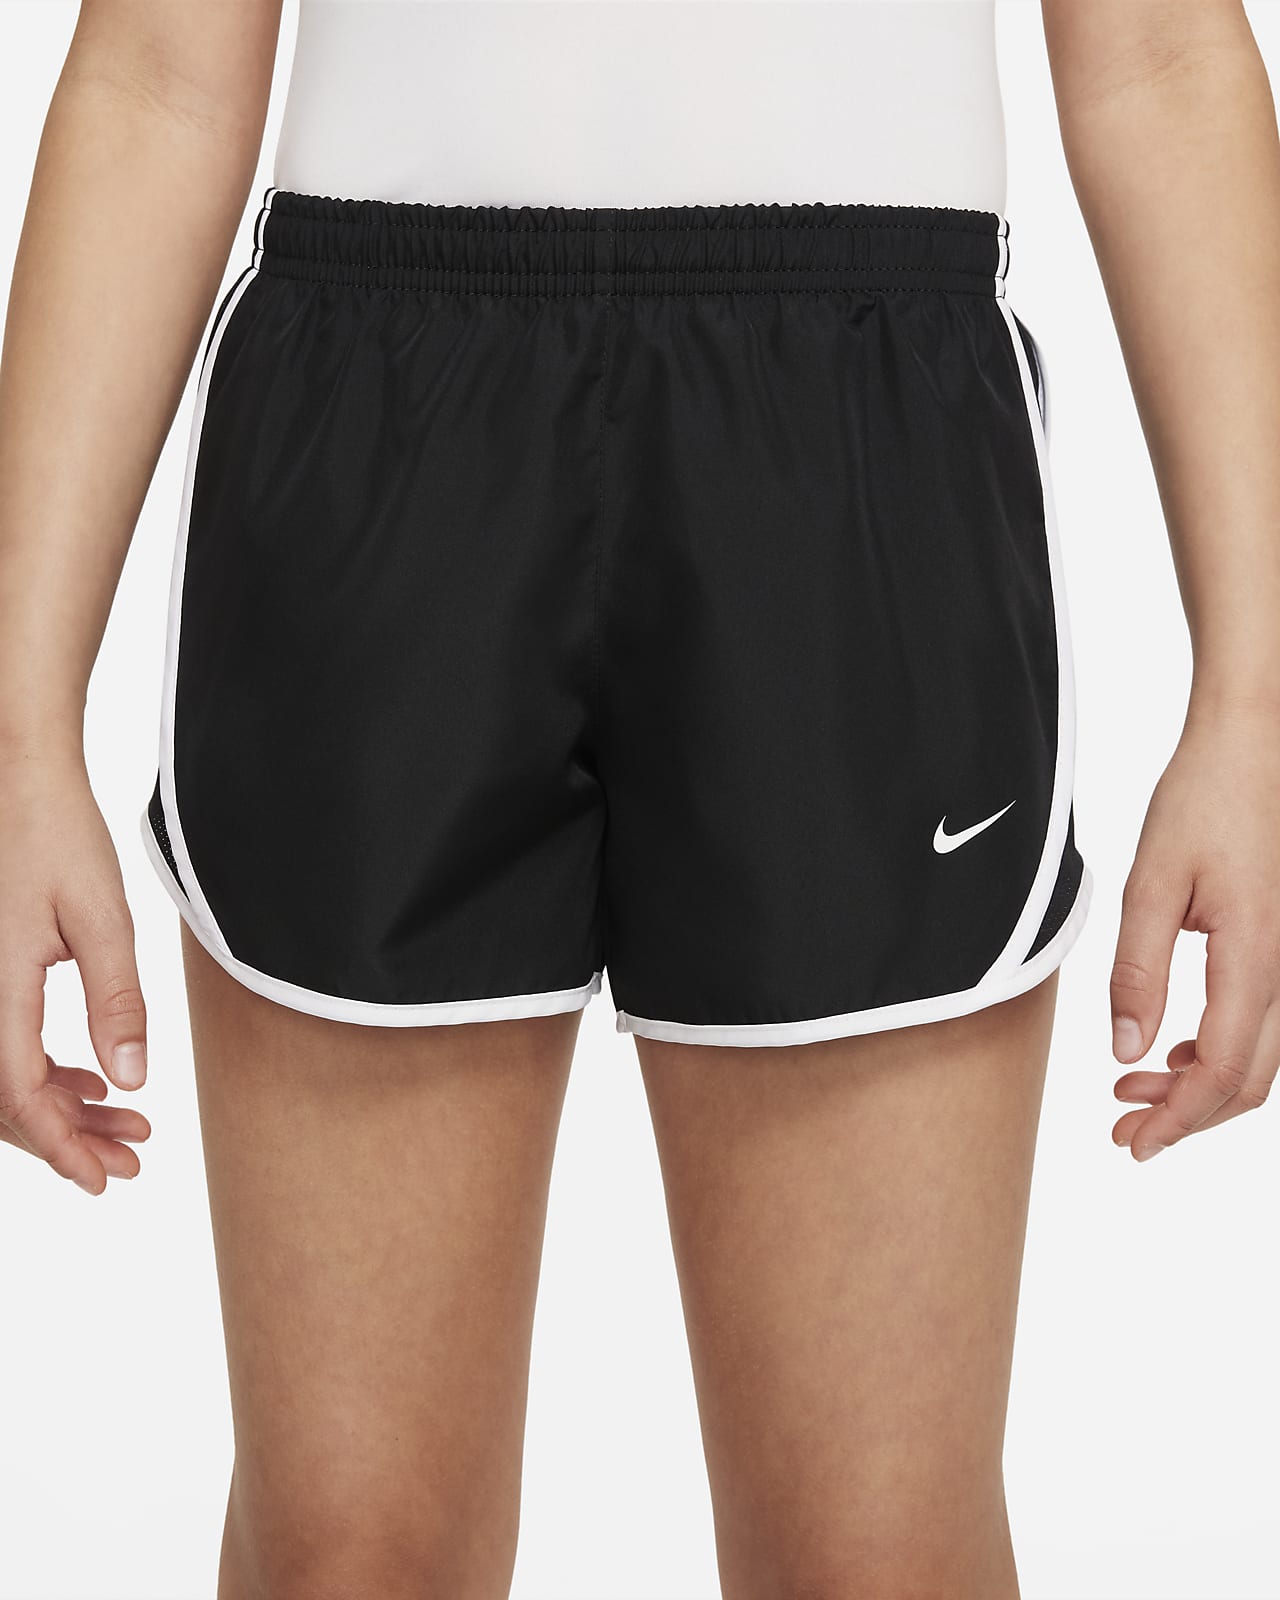 Nike | Dri-FIT Phenom Elite Men's Knit Trail Running Pants | Performance  Tracksuit Bottoms | SportsDirect.com